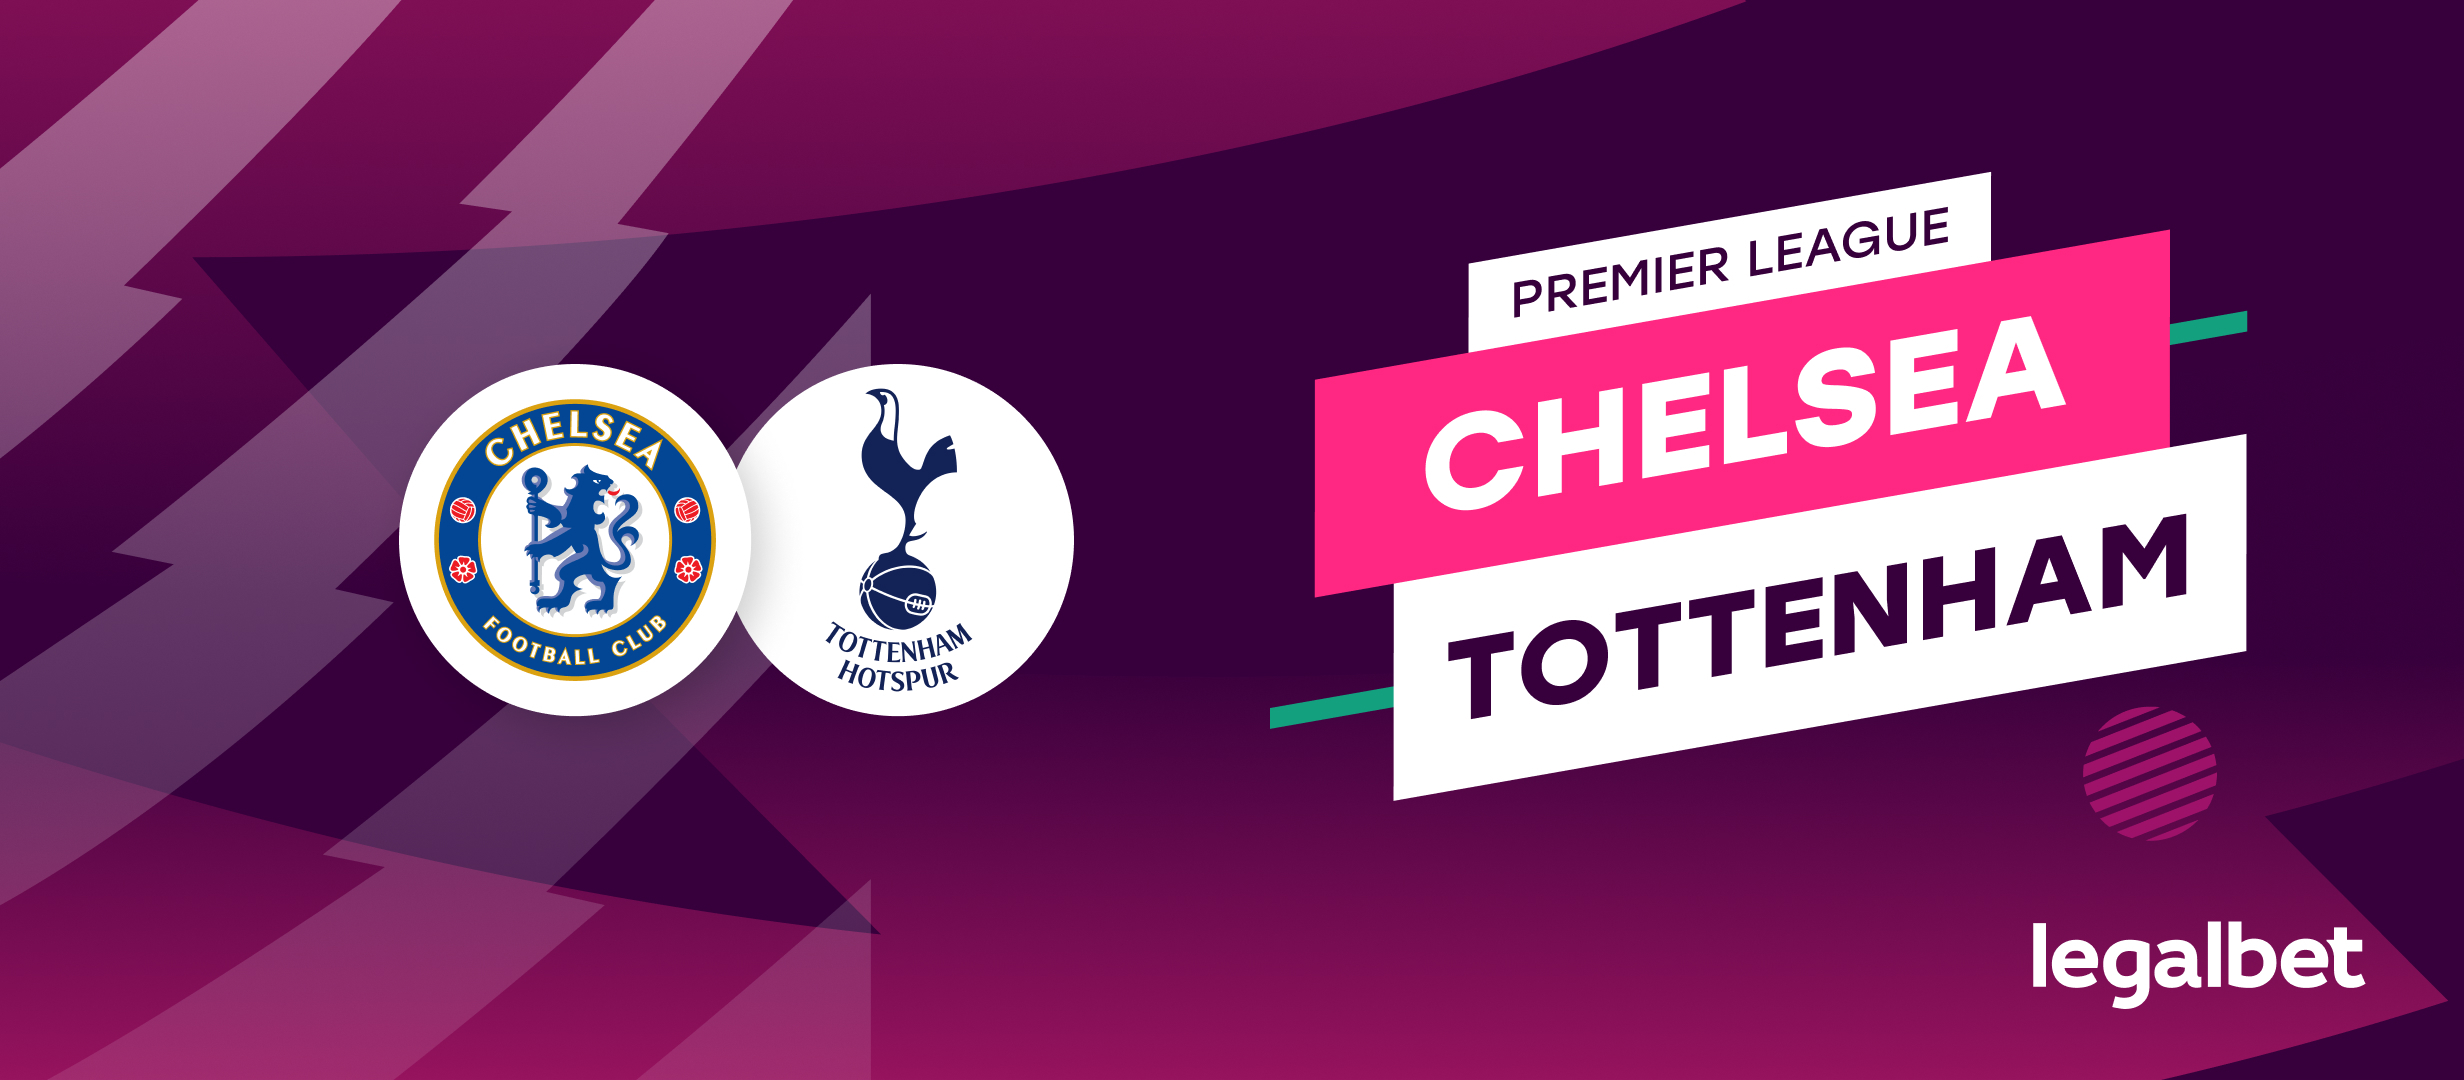 Chelsea - Tottenham, ponturi la pariuri Premier League